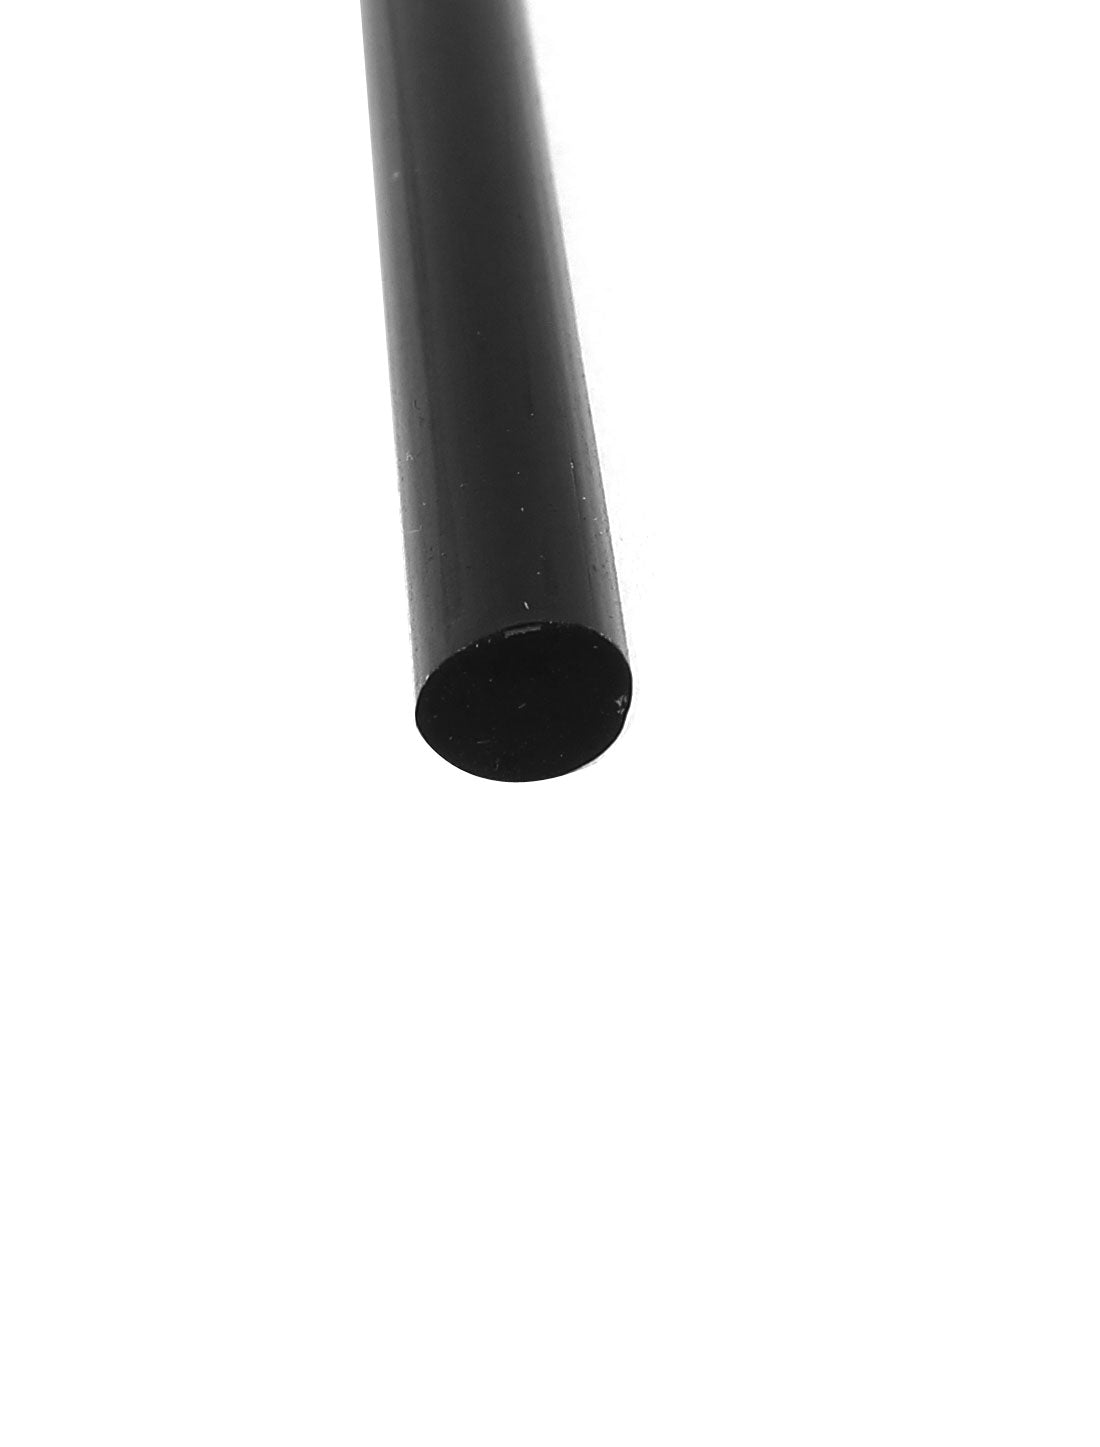 uxcell Uxcell 10 Pcs 7mm Diameter 190mm Long Crafting Models Black Plastic Hot Melt Glue Stick